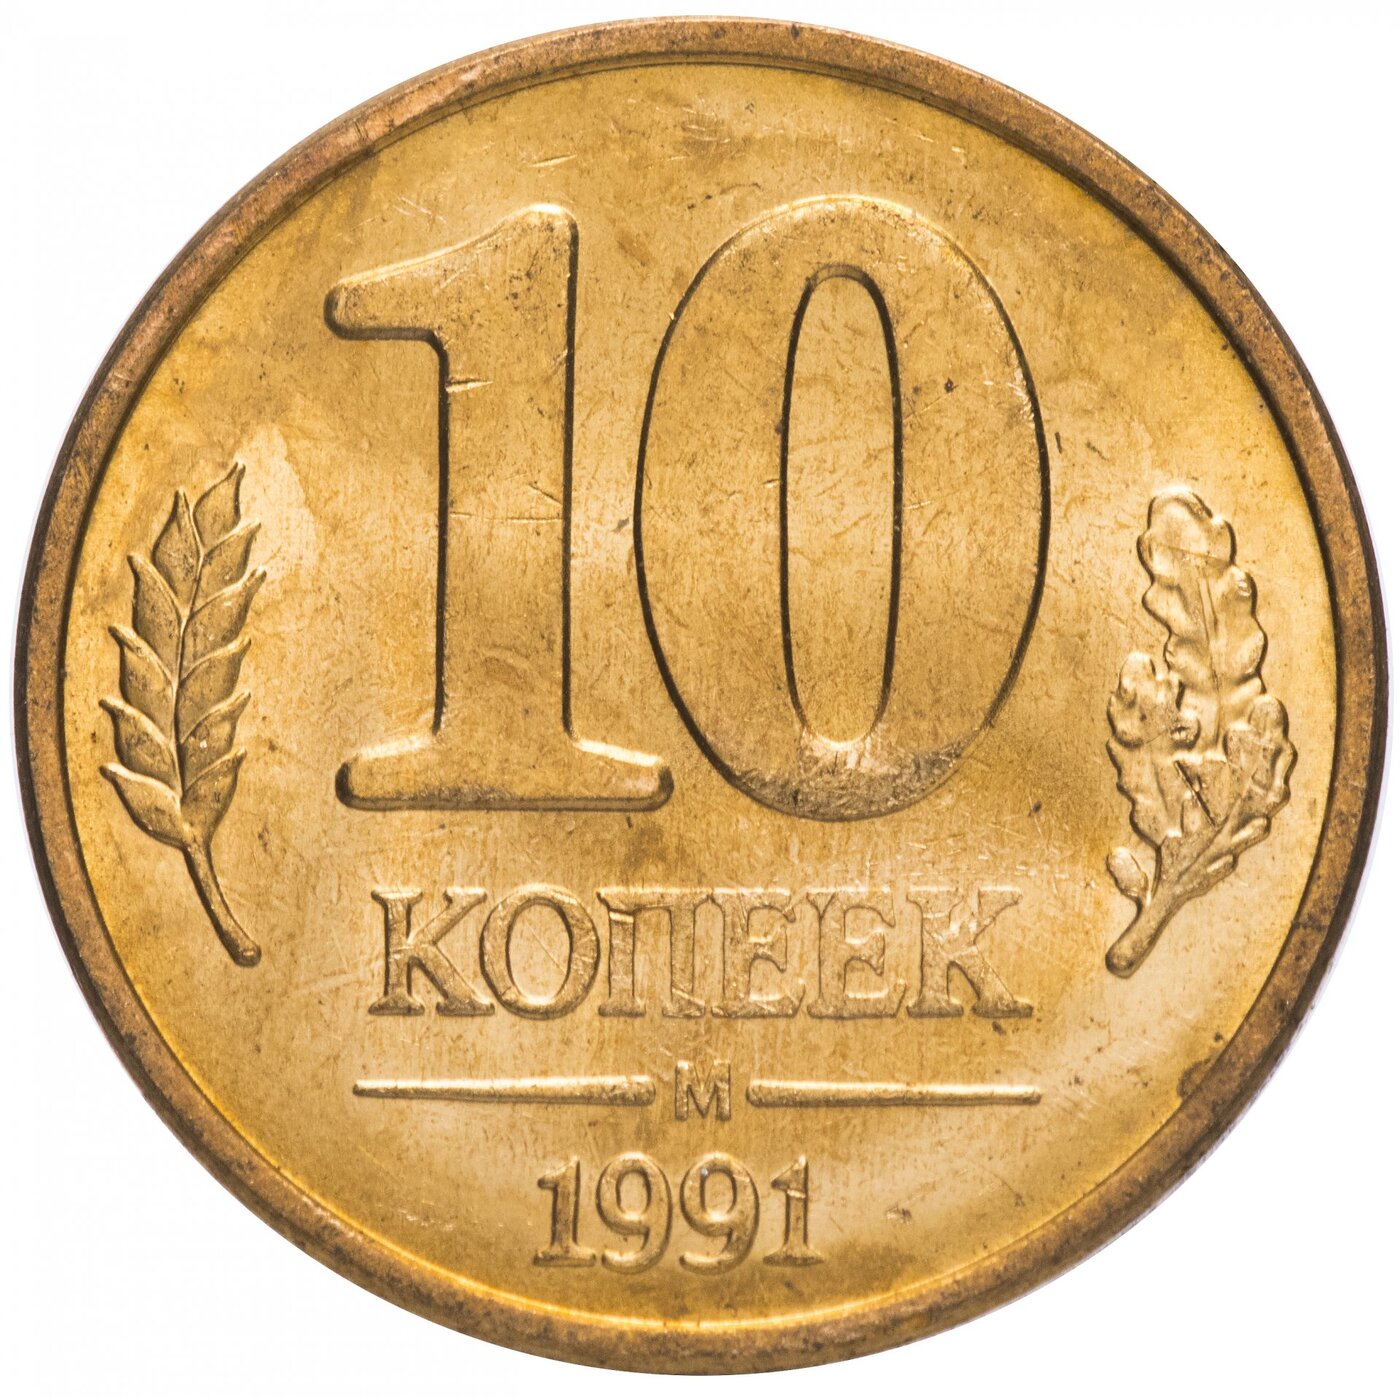 10 копеек. 10 Копеек 1991 м. Монета 10 копеек 1991 м. Монета 1991 года 10 р. Буква м на 10 копейках.